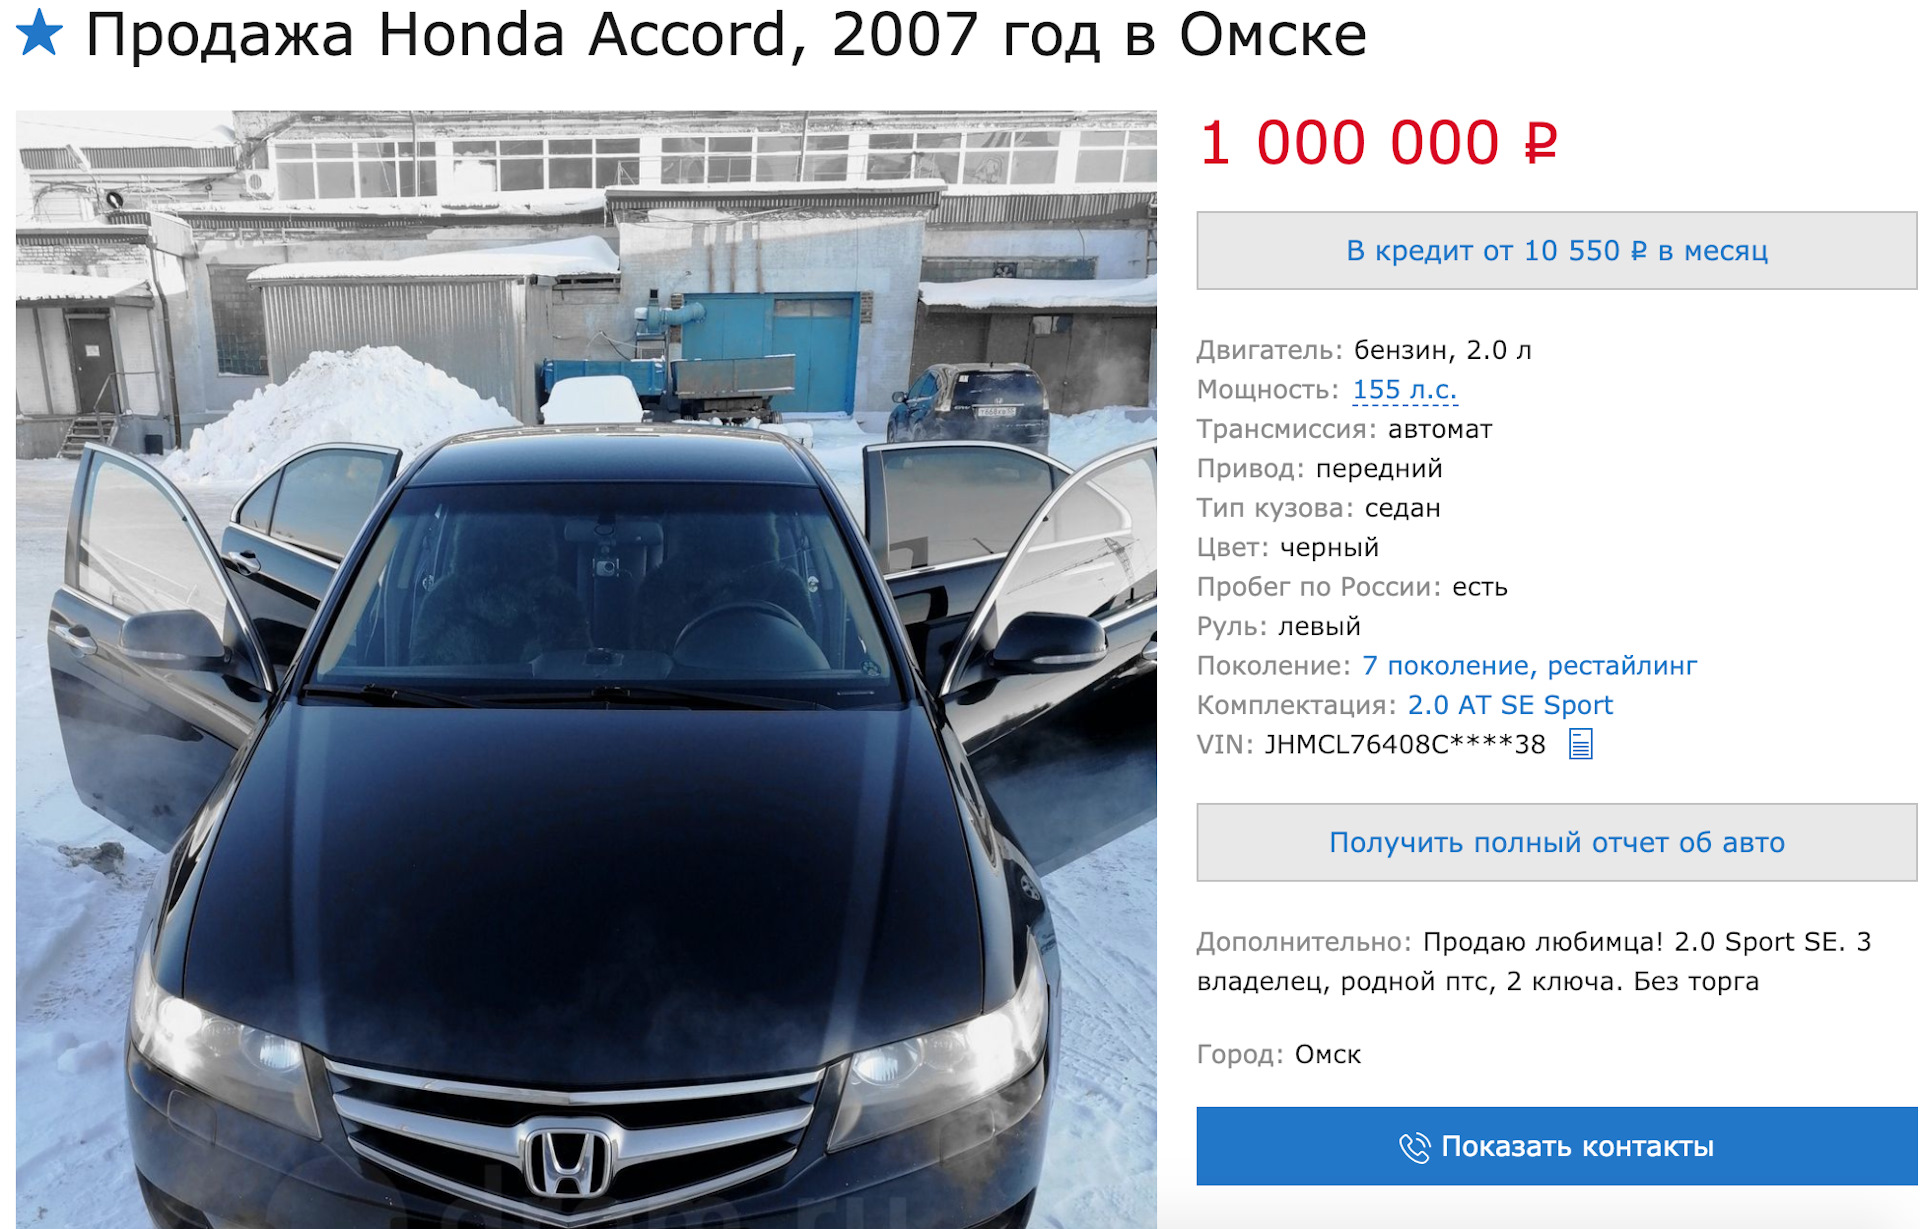 Куплю авто красноярск дром. Honda Accord 2007 VIN. Омск Honda Accord. Описание для продажи авто. Honda Accord 2007 реклама.